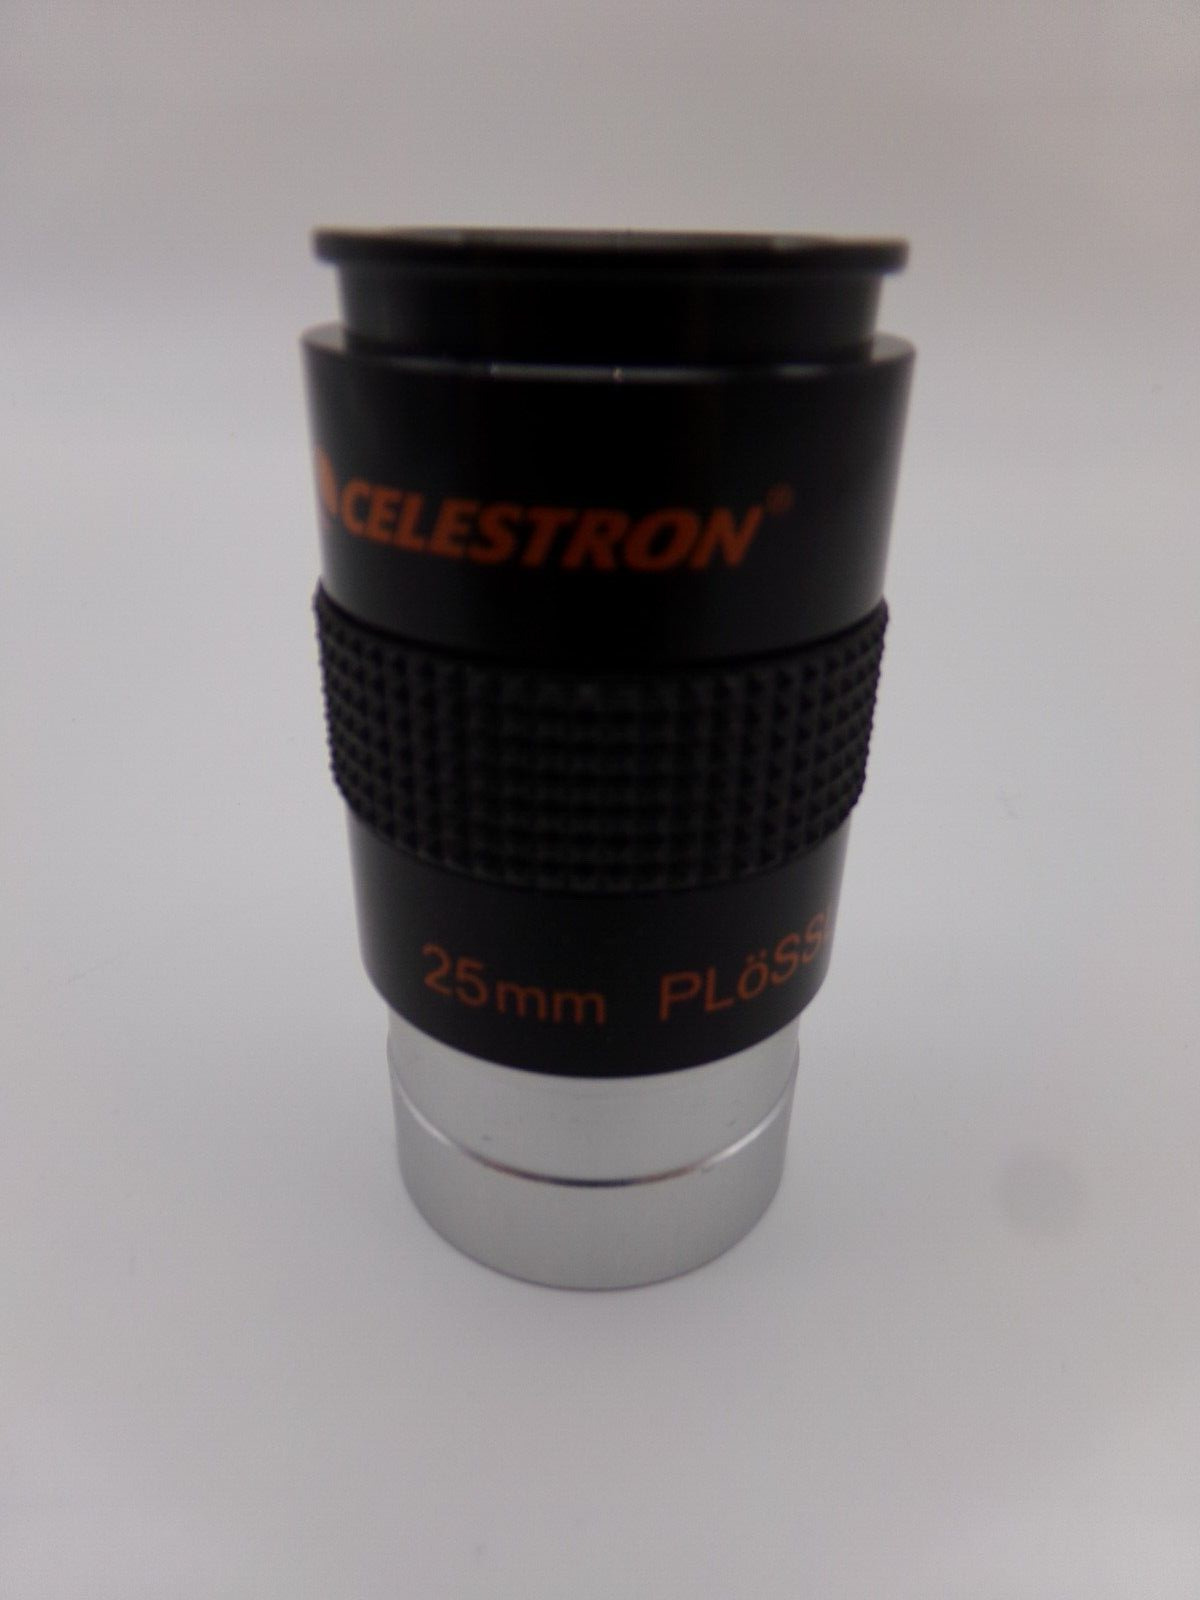 Celestron 25mm 50 Degree Field of View Plossl 1.25 inch Eyepiece